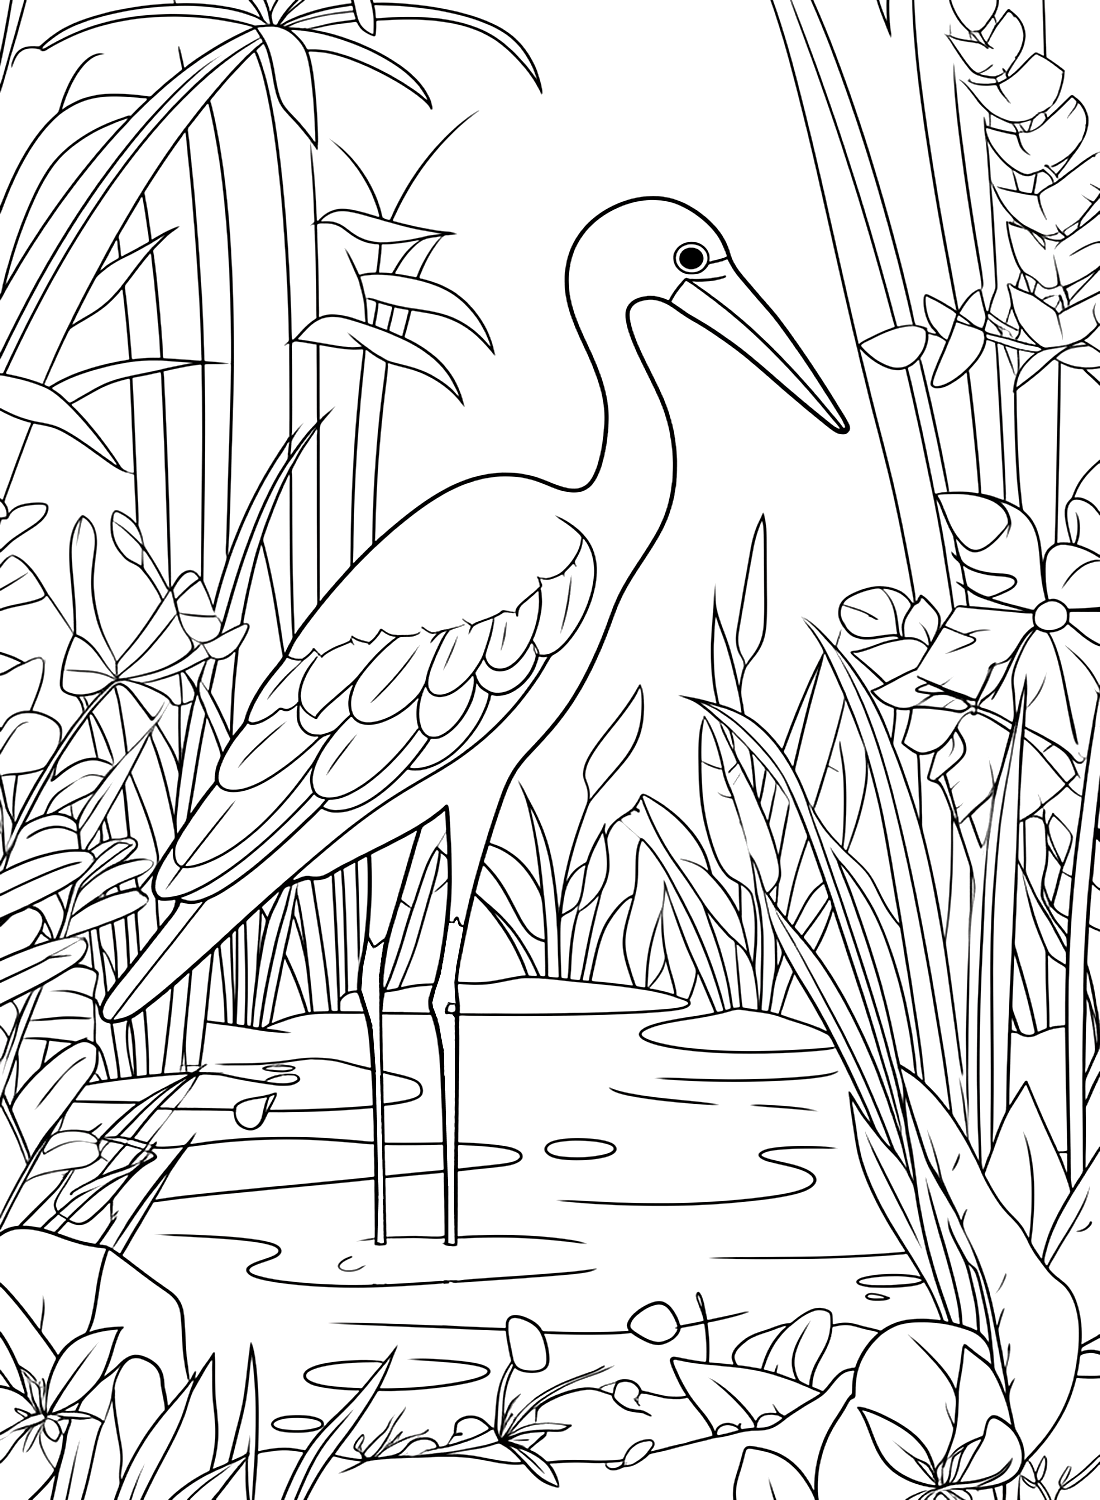 沼泽中的鹳鸟 from Stork